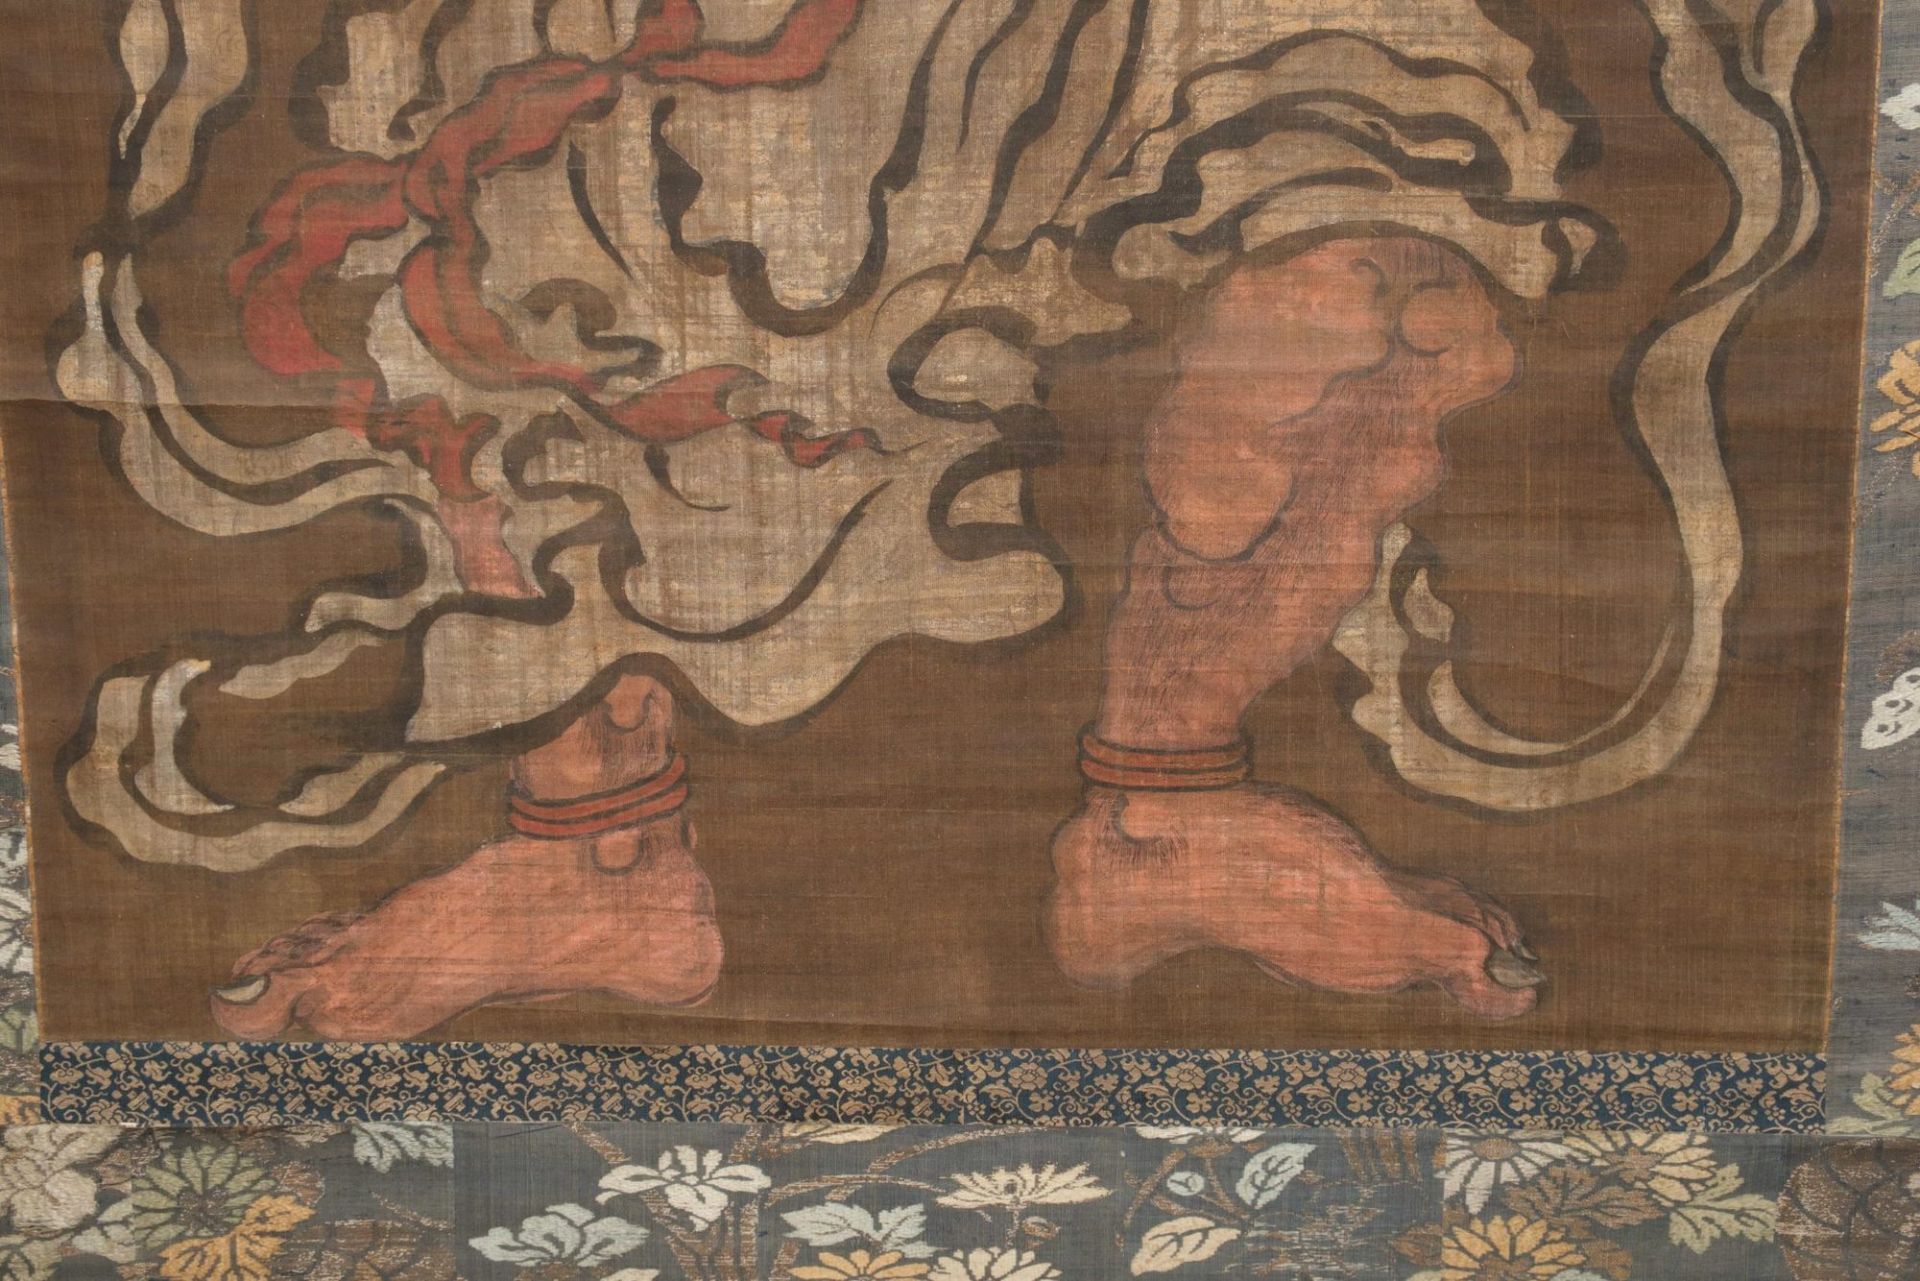 A PAIR OF JAPANESE EARLY EDO-PERIOD KAKEJIKU DEPICTING NIÔ GUARDIANS, CIRCA 1700 (EARLY EDO PERIOD) - Image 4 of 5